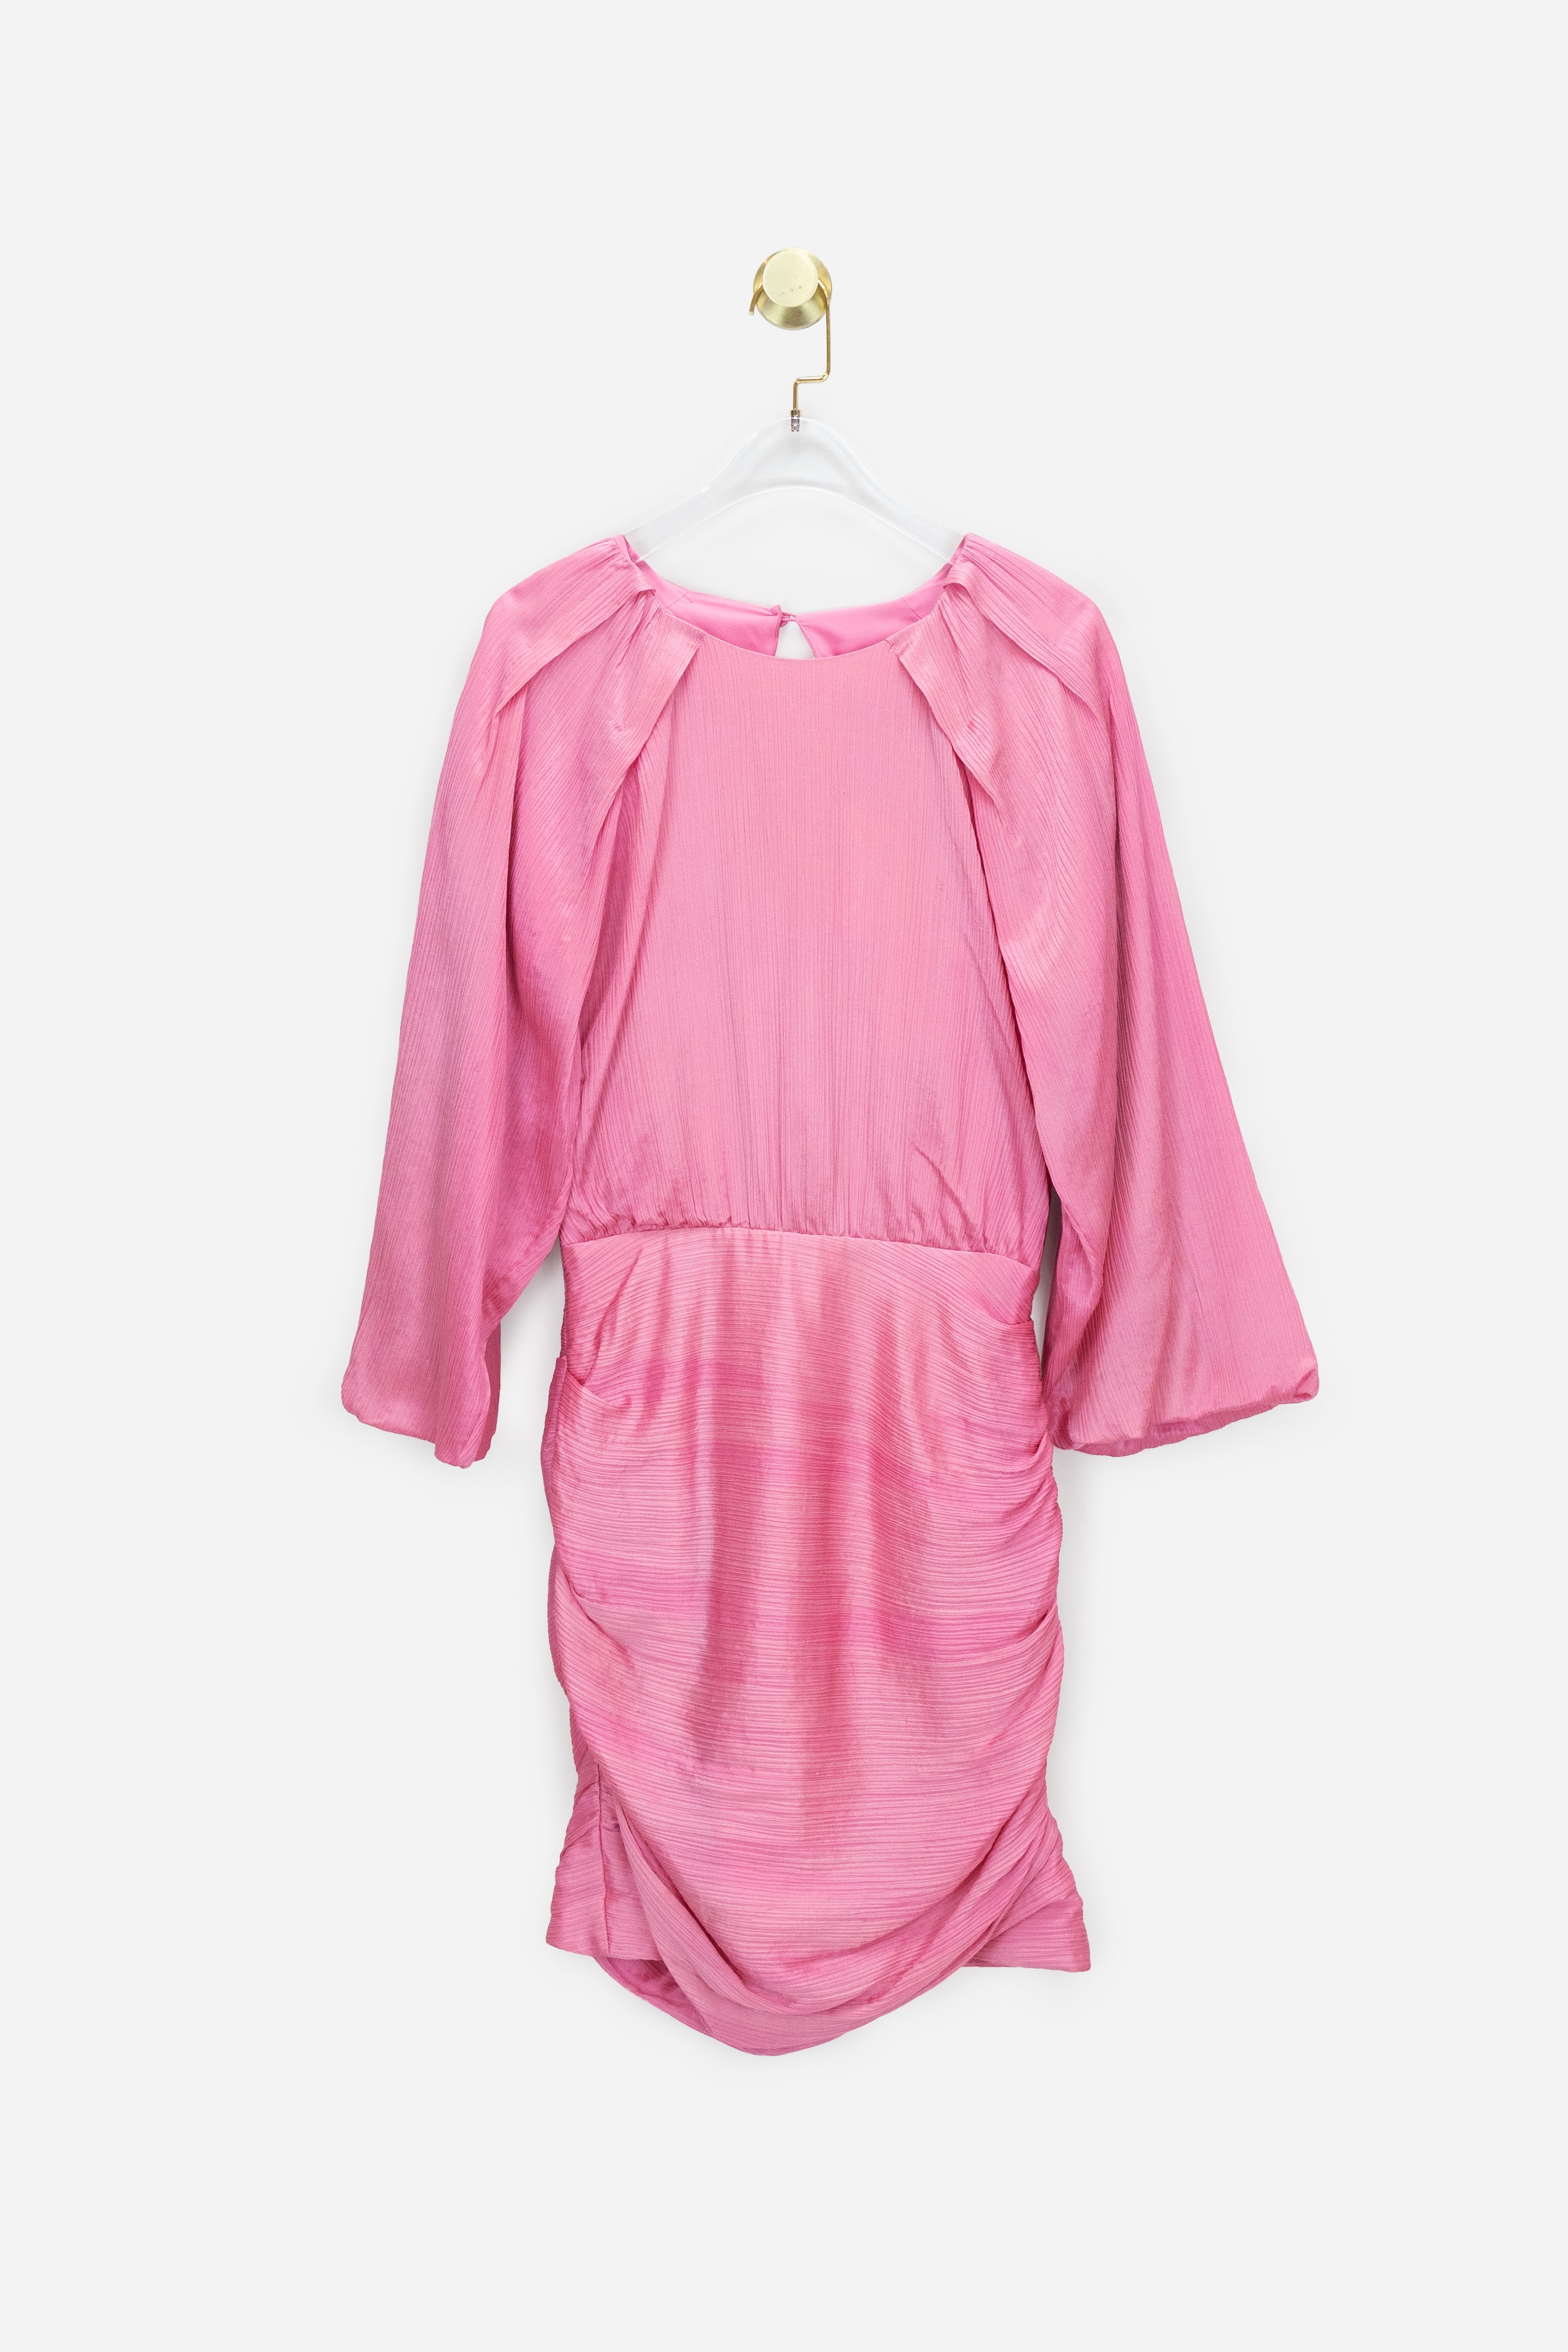 Gracelynn Sherbert Dress - So Over It Luxury Consignment